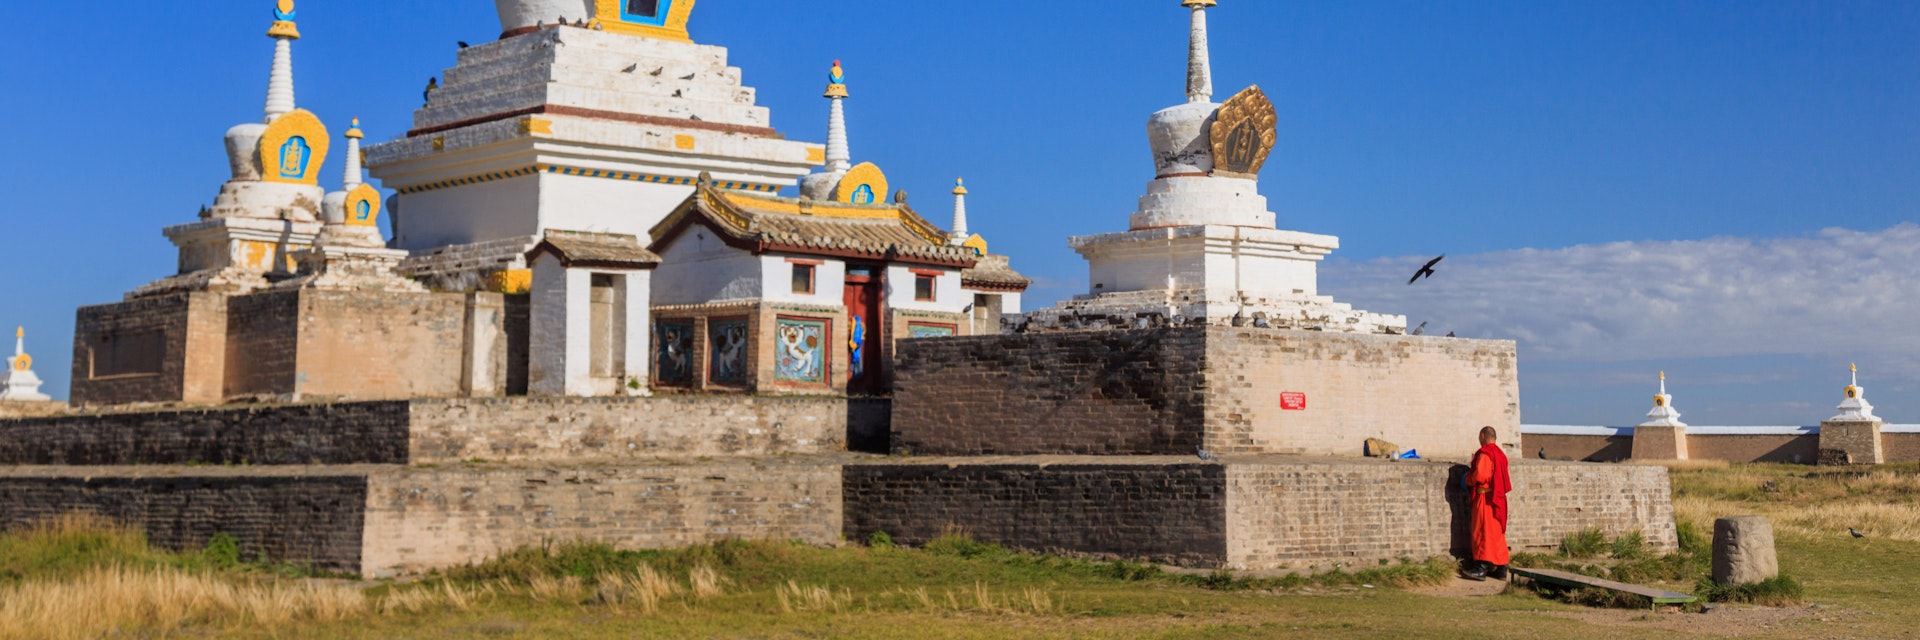 Stupa of Erdene Zuu monastery in the town of Kharkhorin, Mongolia.